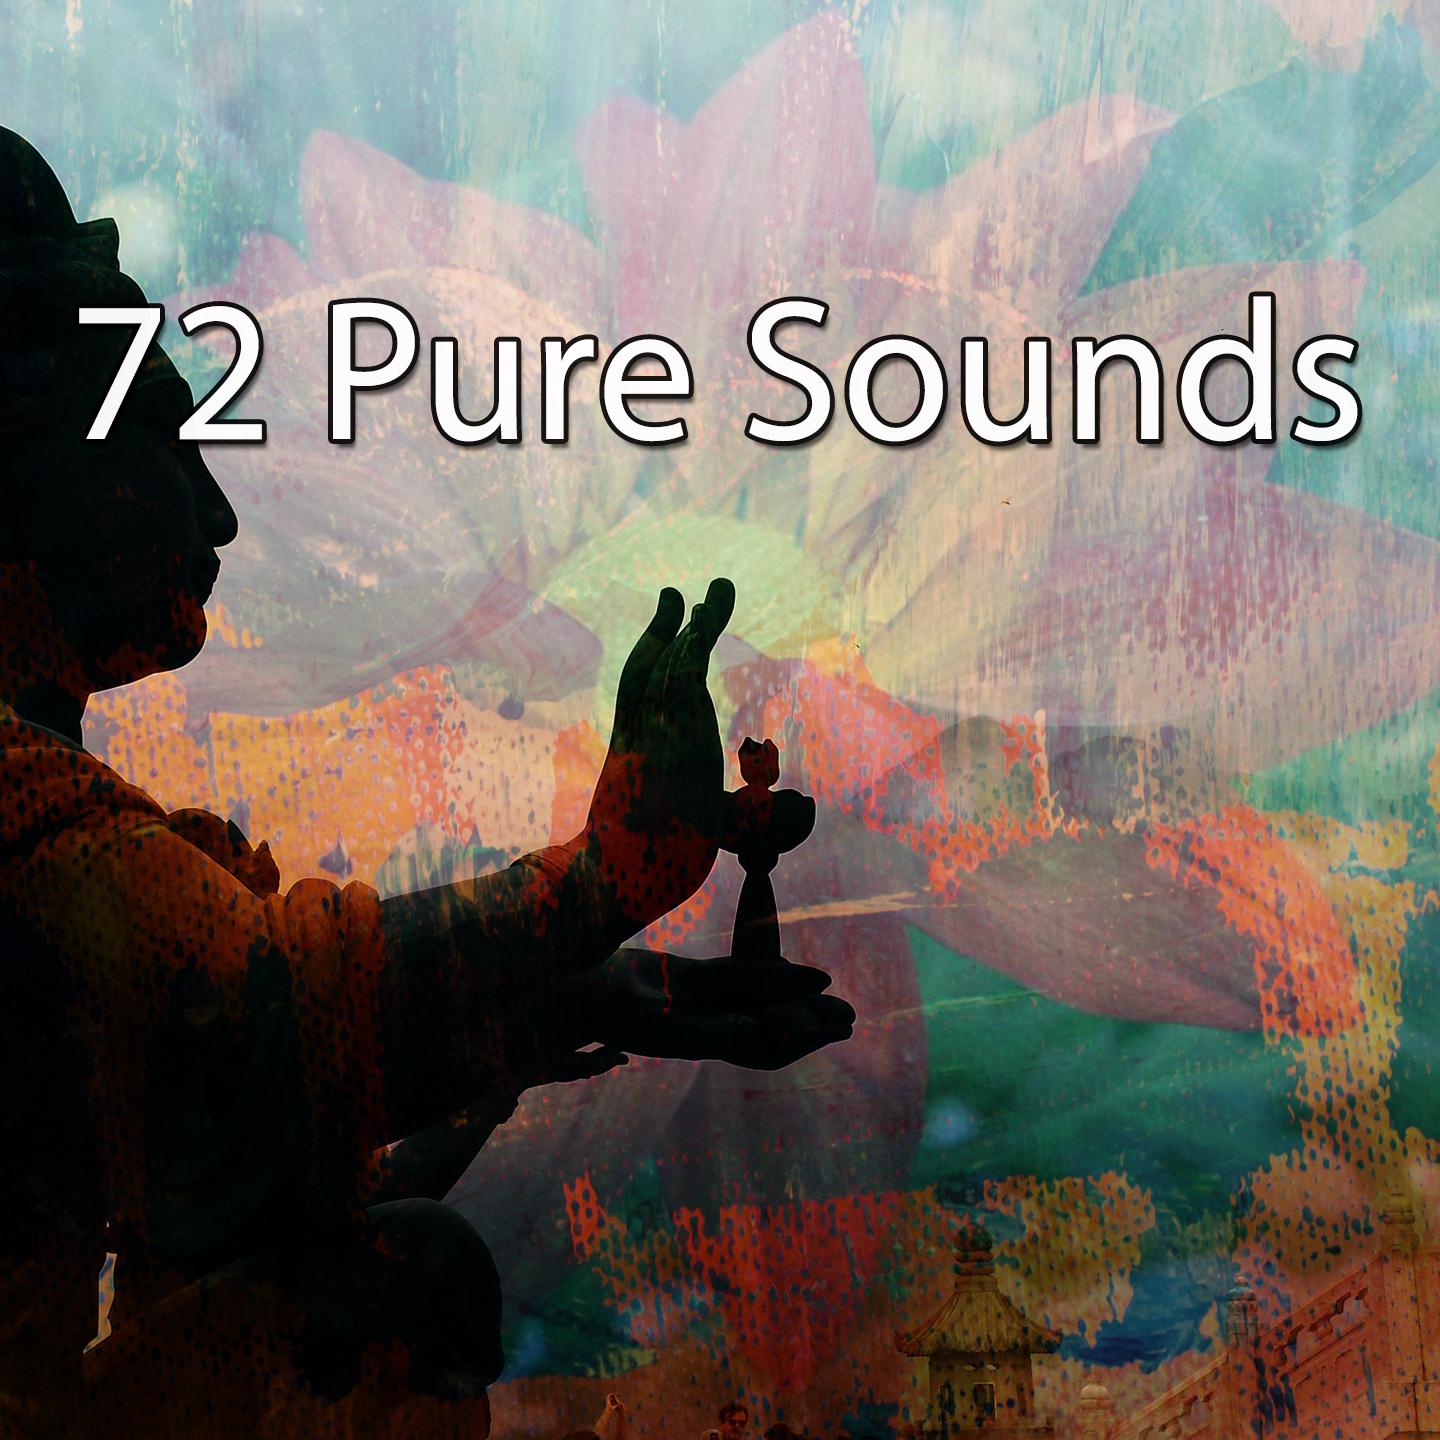 72 Pure Sounds